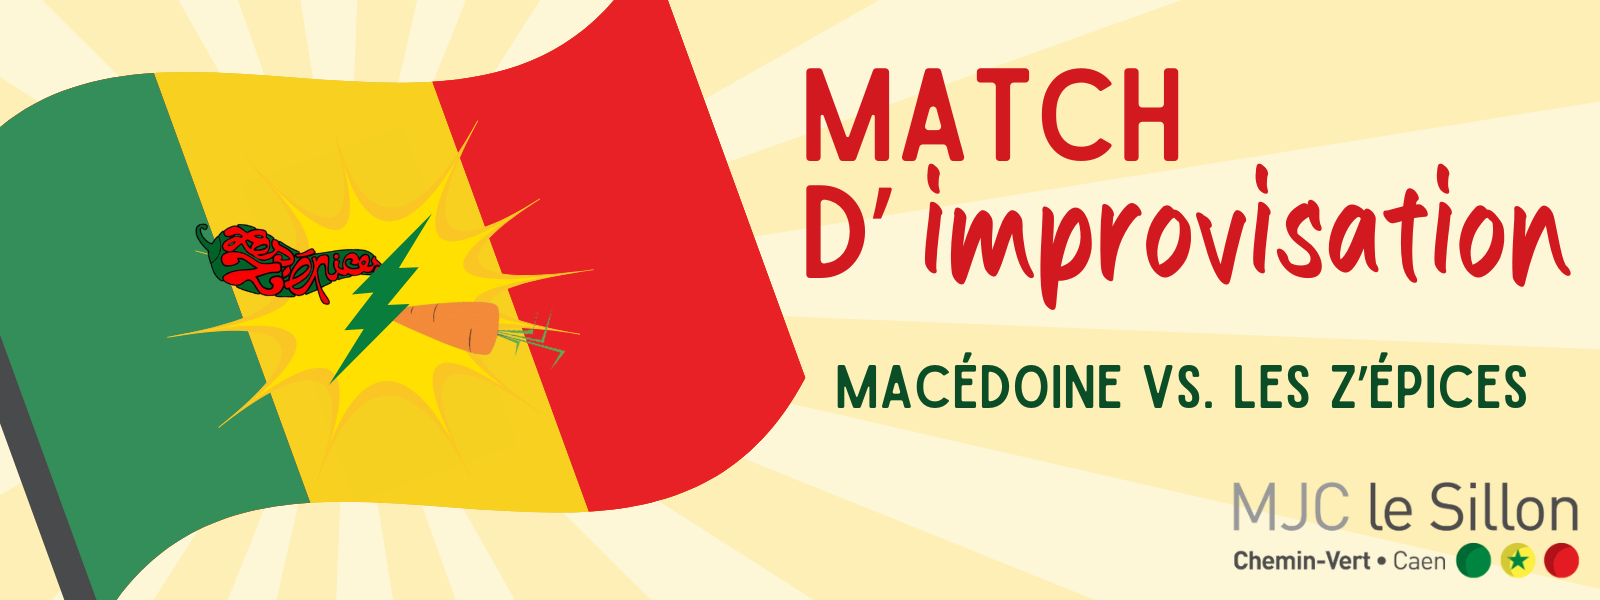 Match d'improvisation Macédoine Sénégal